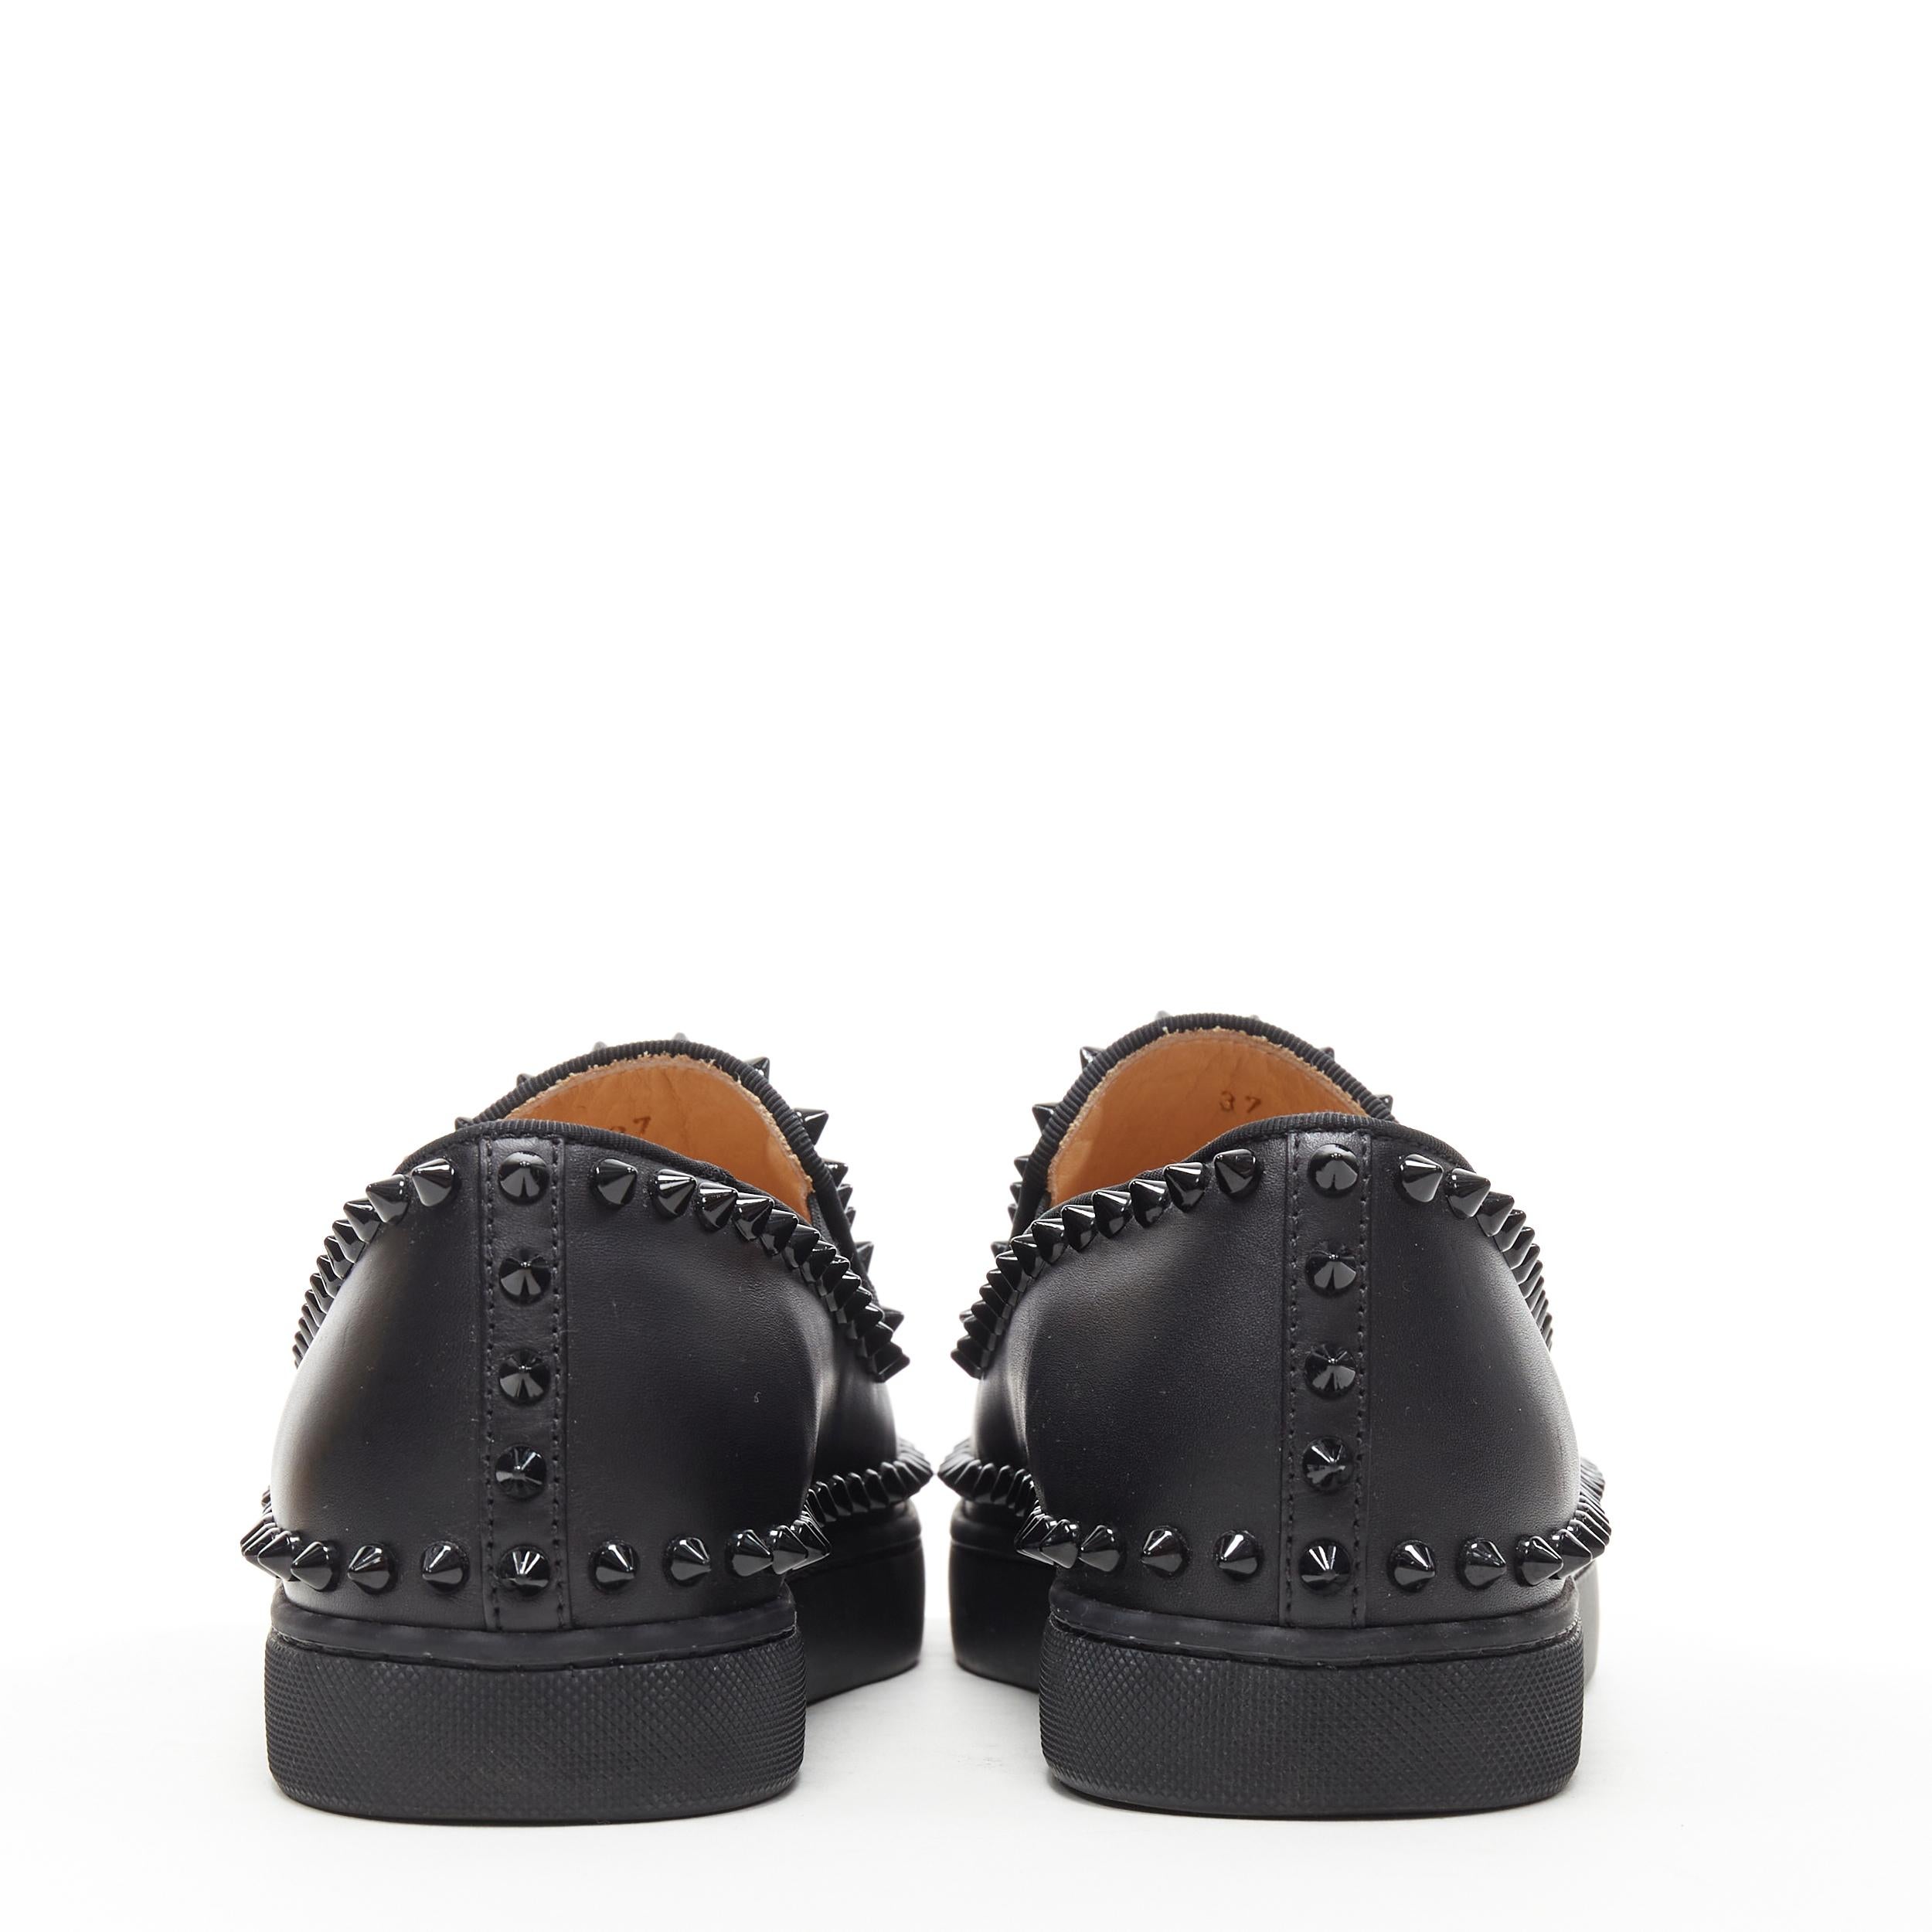 CHRISTIAN LOUBOUTIN Black leather spike stud embellished low top sneakers EU37 1